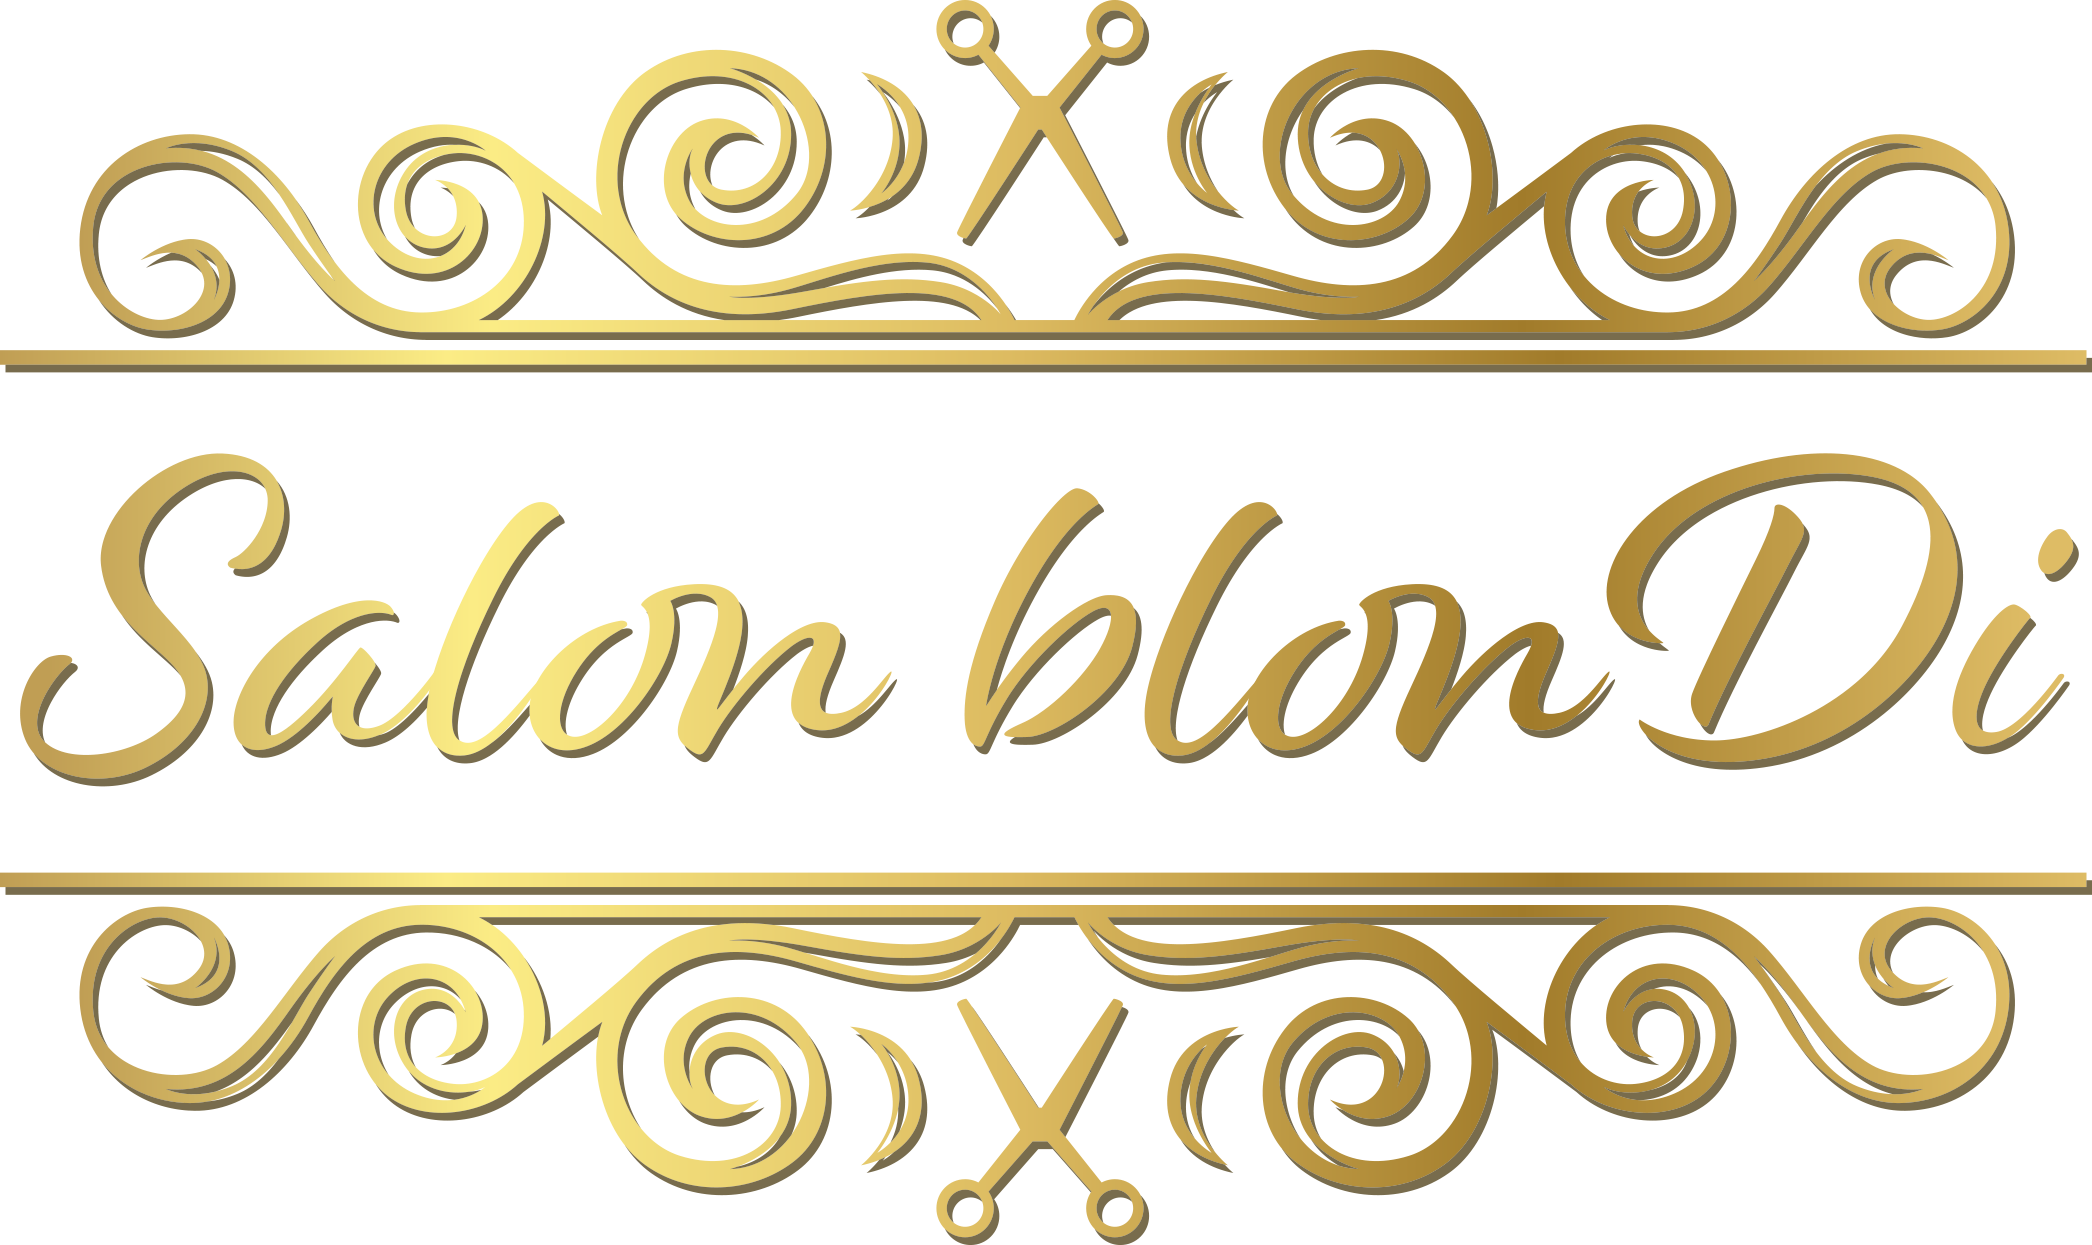 Salon blonDi Logo